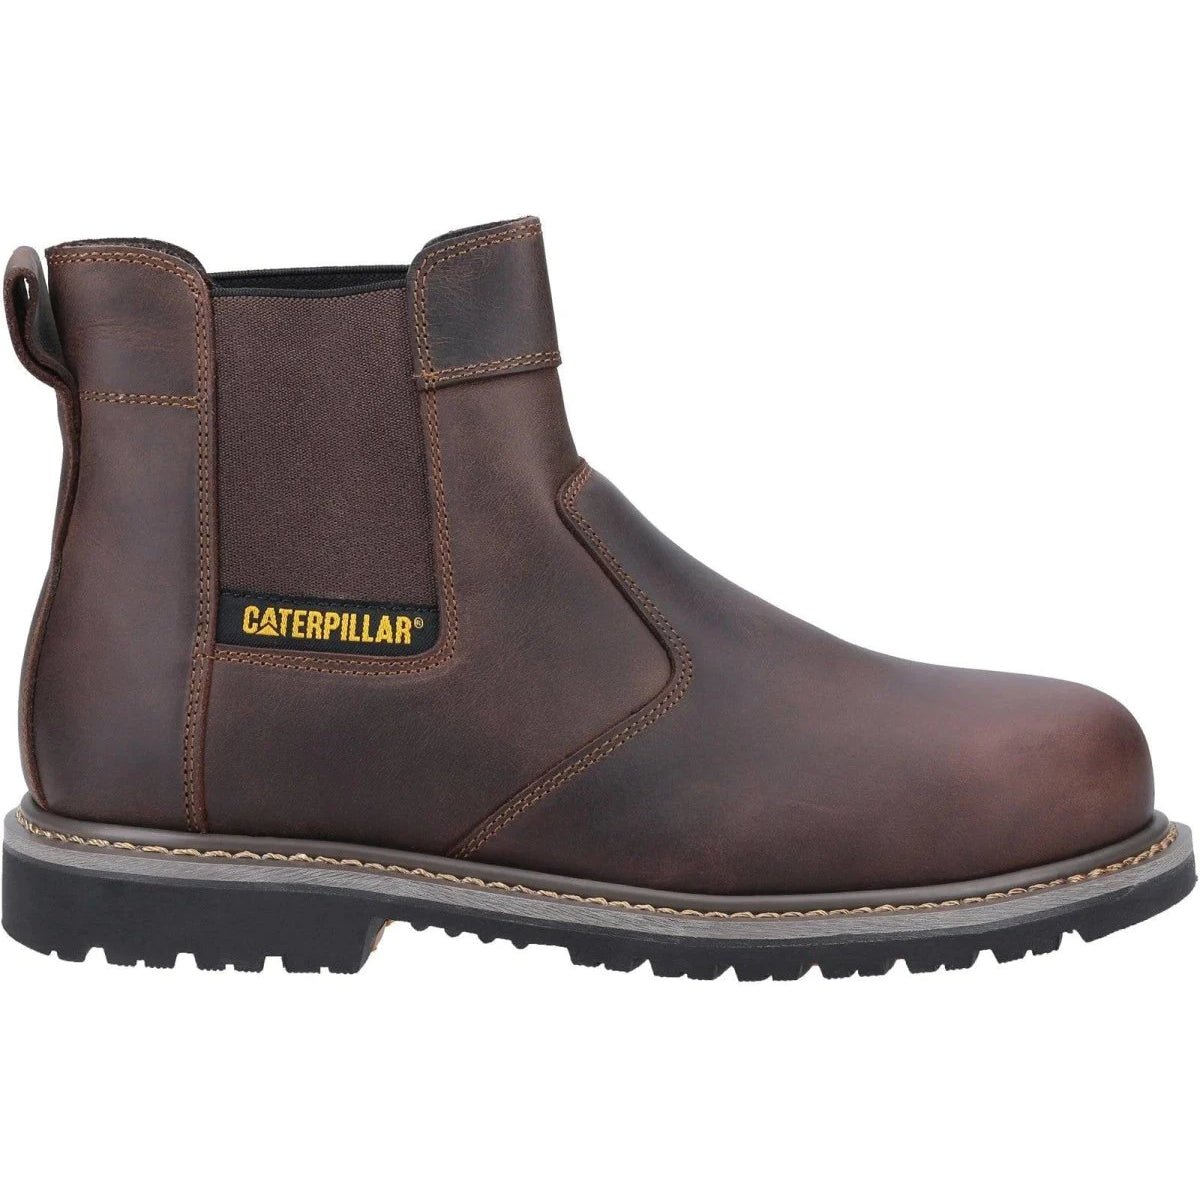 Caterpillar Powerplant Safety Dealer Boots - Shoe Store Direct